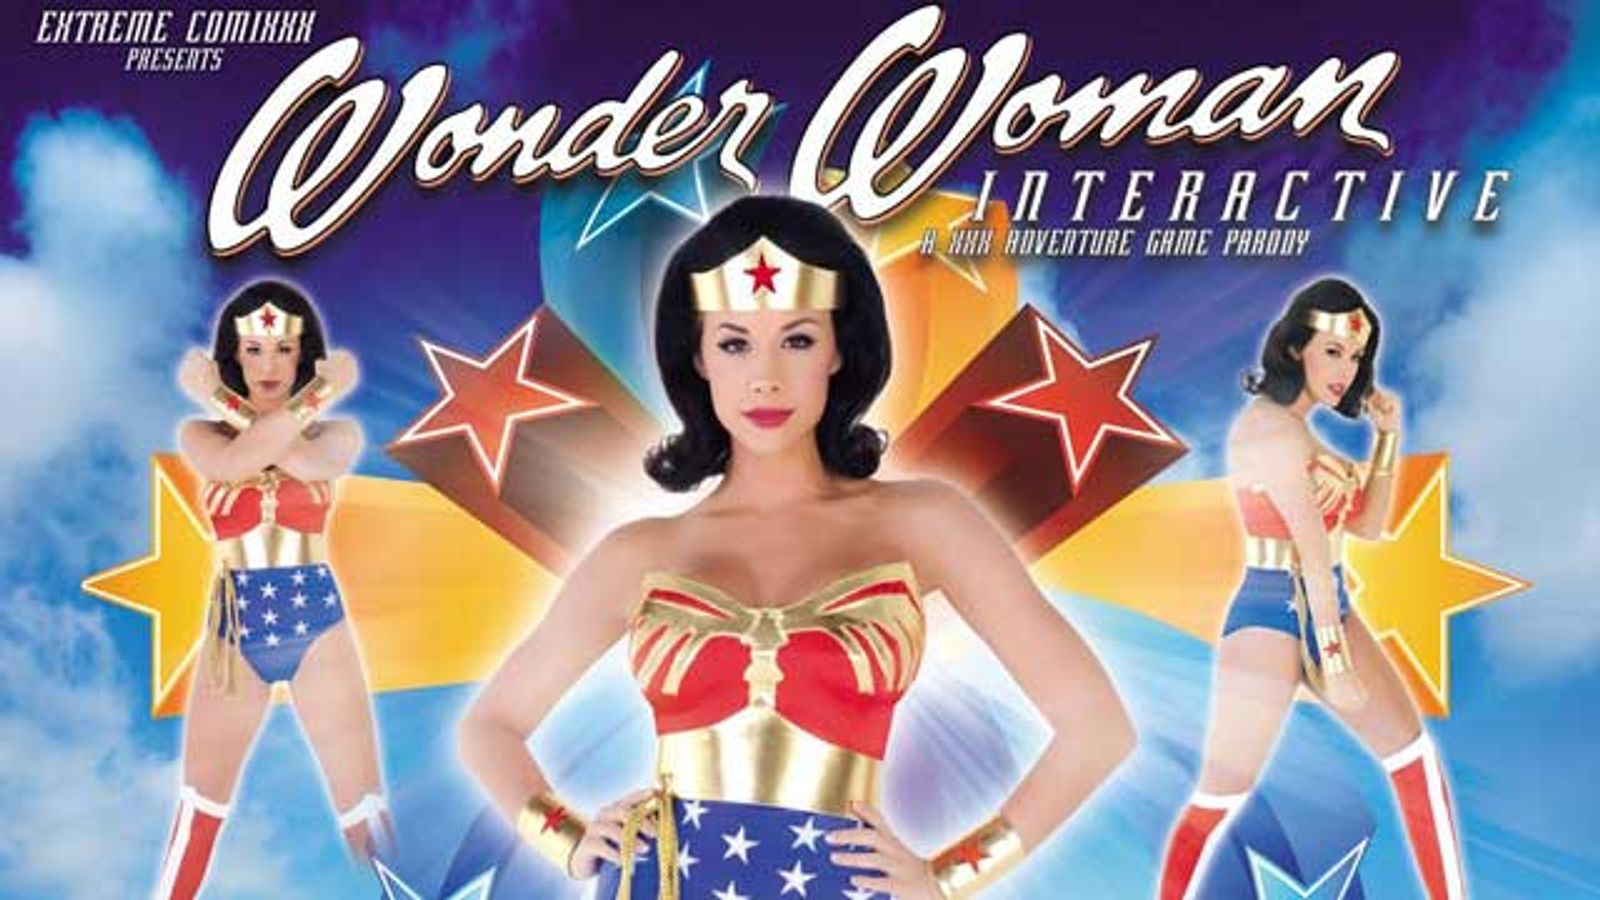 'Wonder Woman Interactive' Trailer Now on ComicBookMovie.com